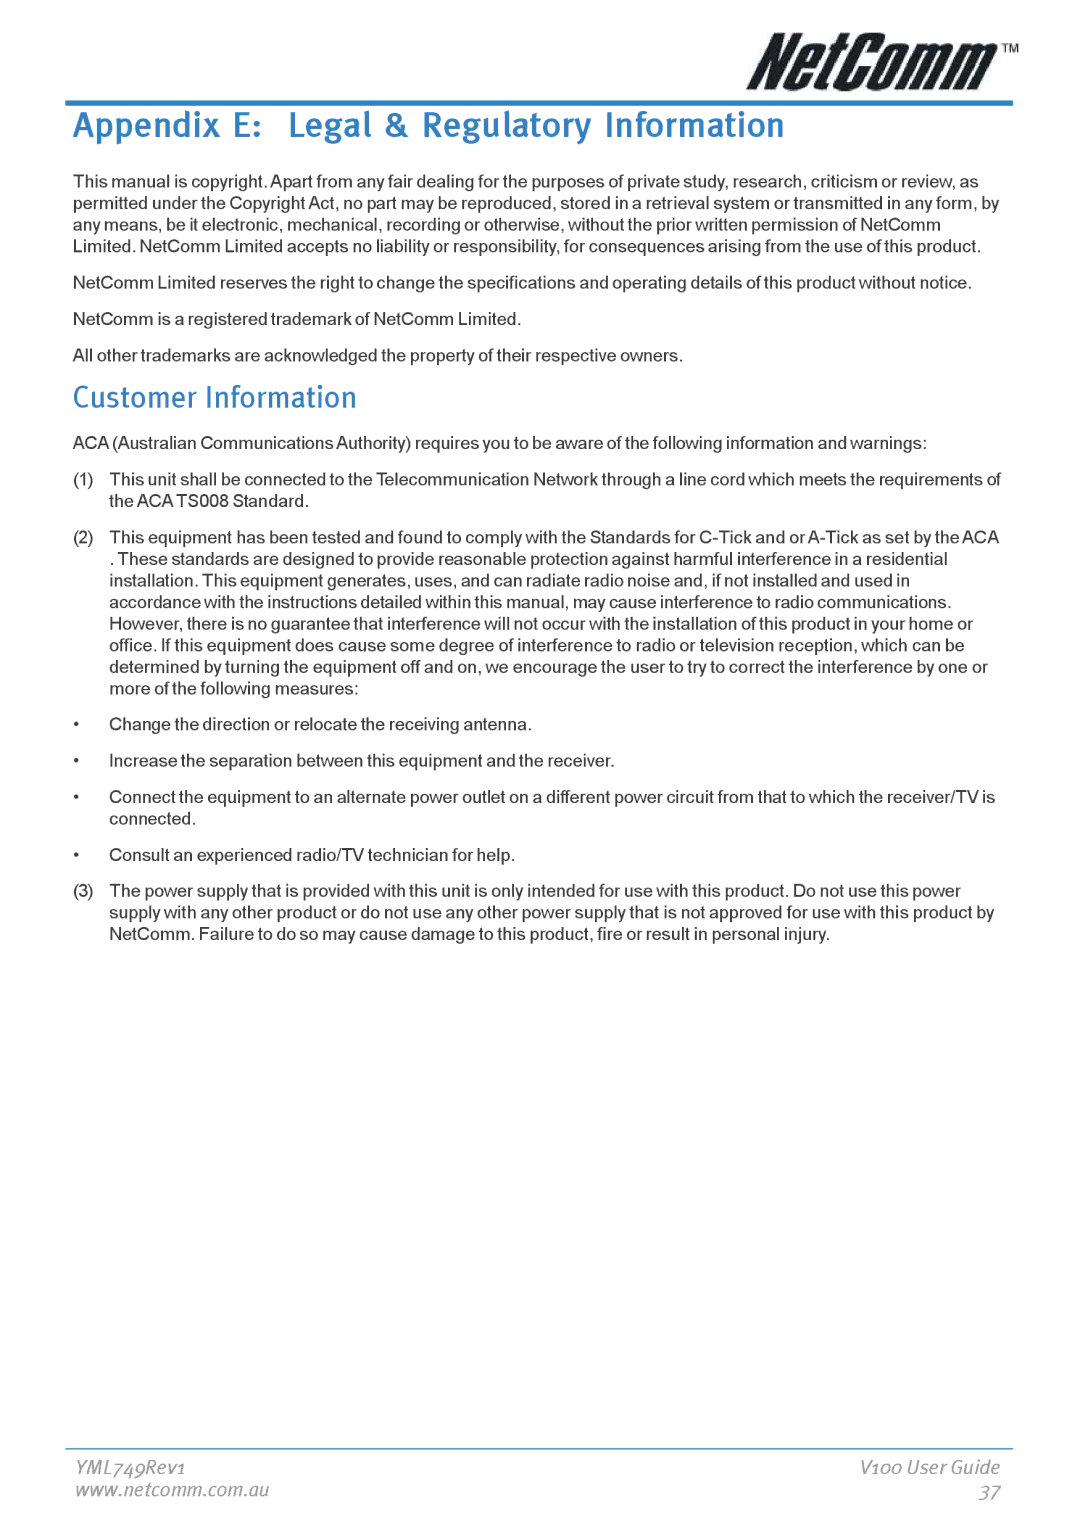 NetComm V100 manual Appendix E Legal & Regulatory Information, Customer Information 